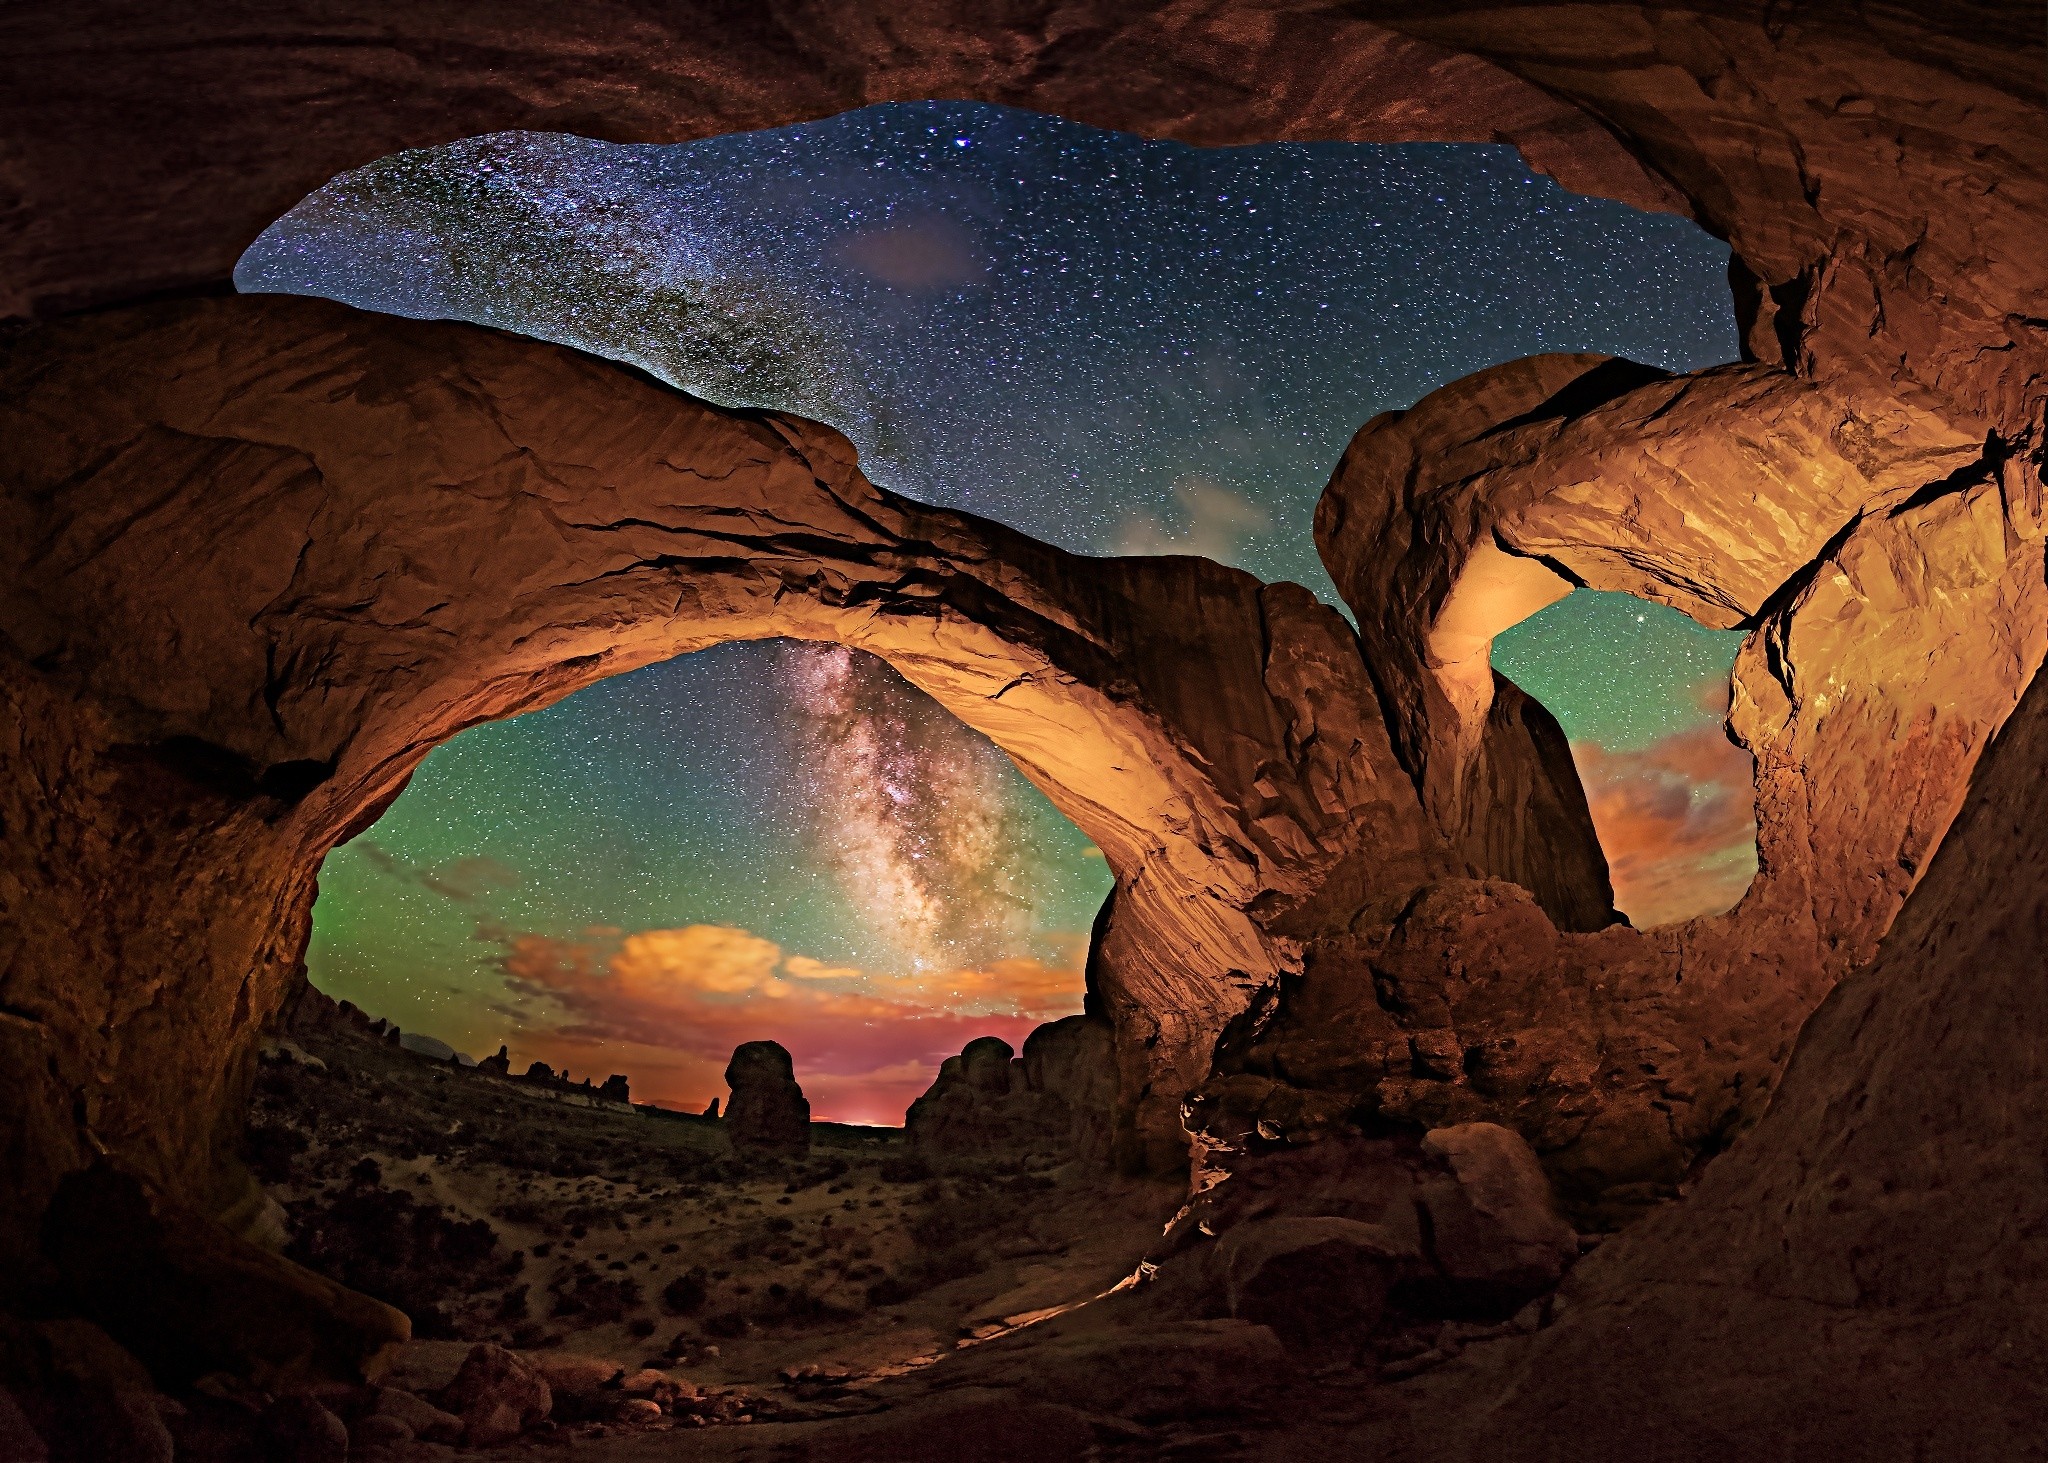 General 2048x1463 nature landscape Milky Way starry night desert rocks erosion Arches National Park Utah long exposure USA stars